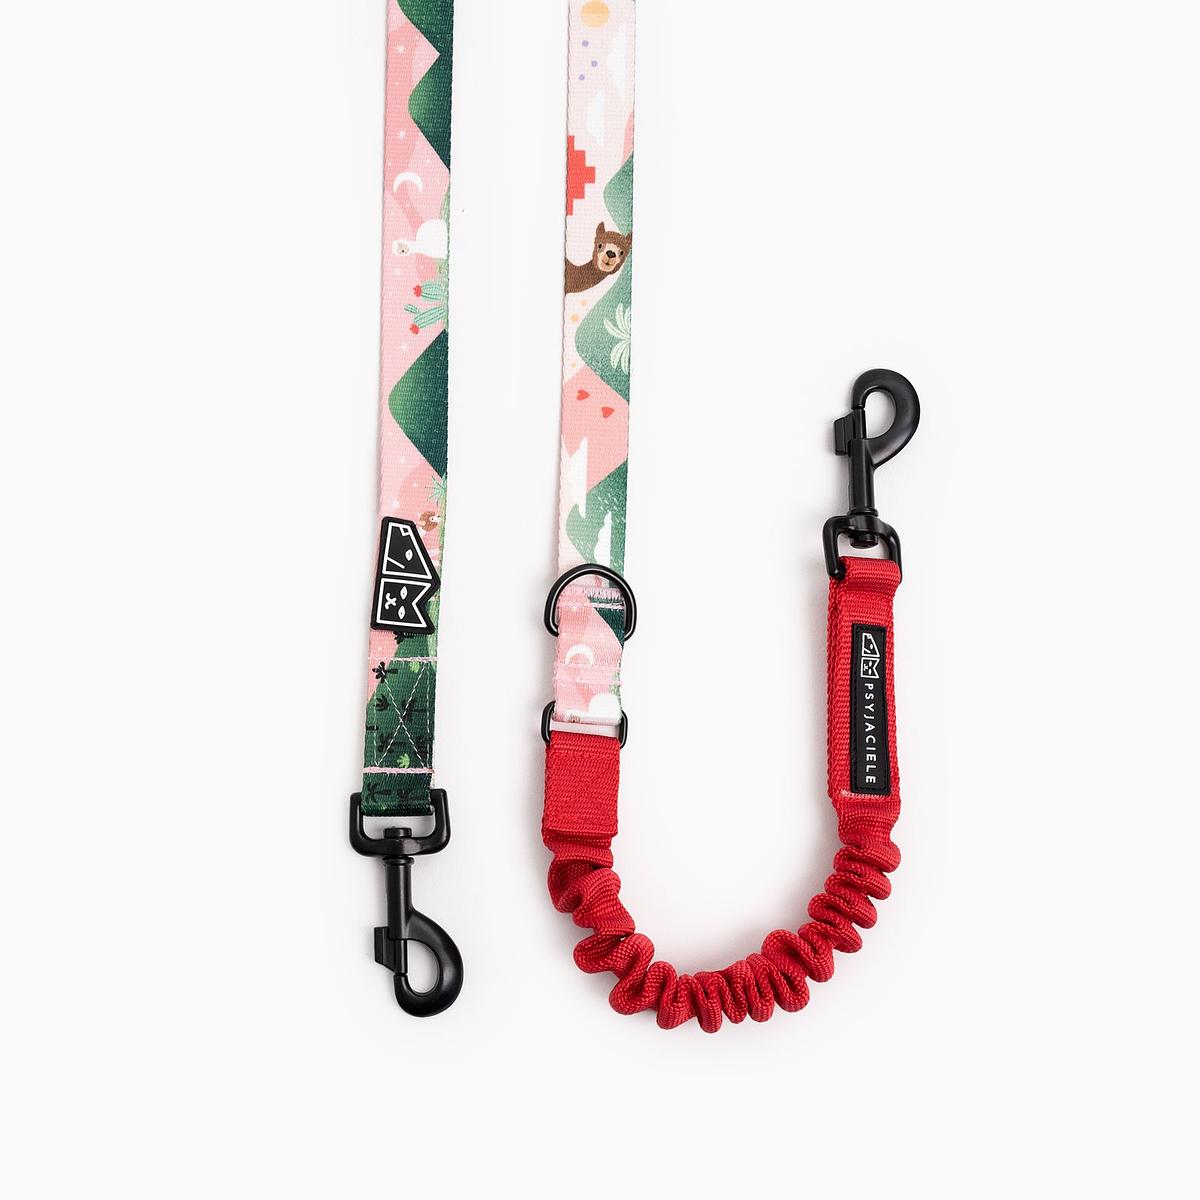 Adjustable leash with shock absorber "No drama lama"